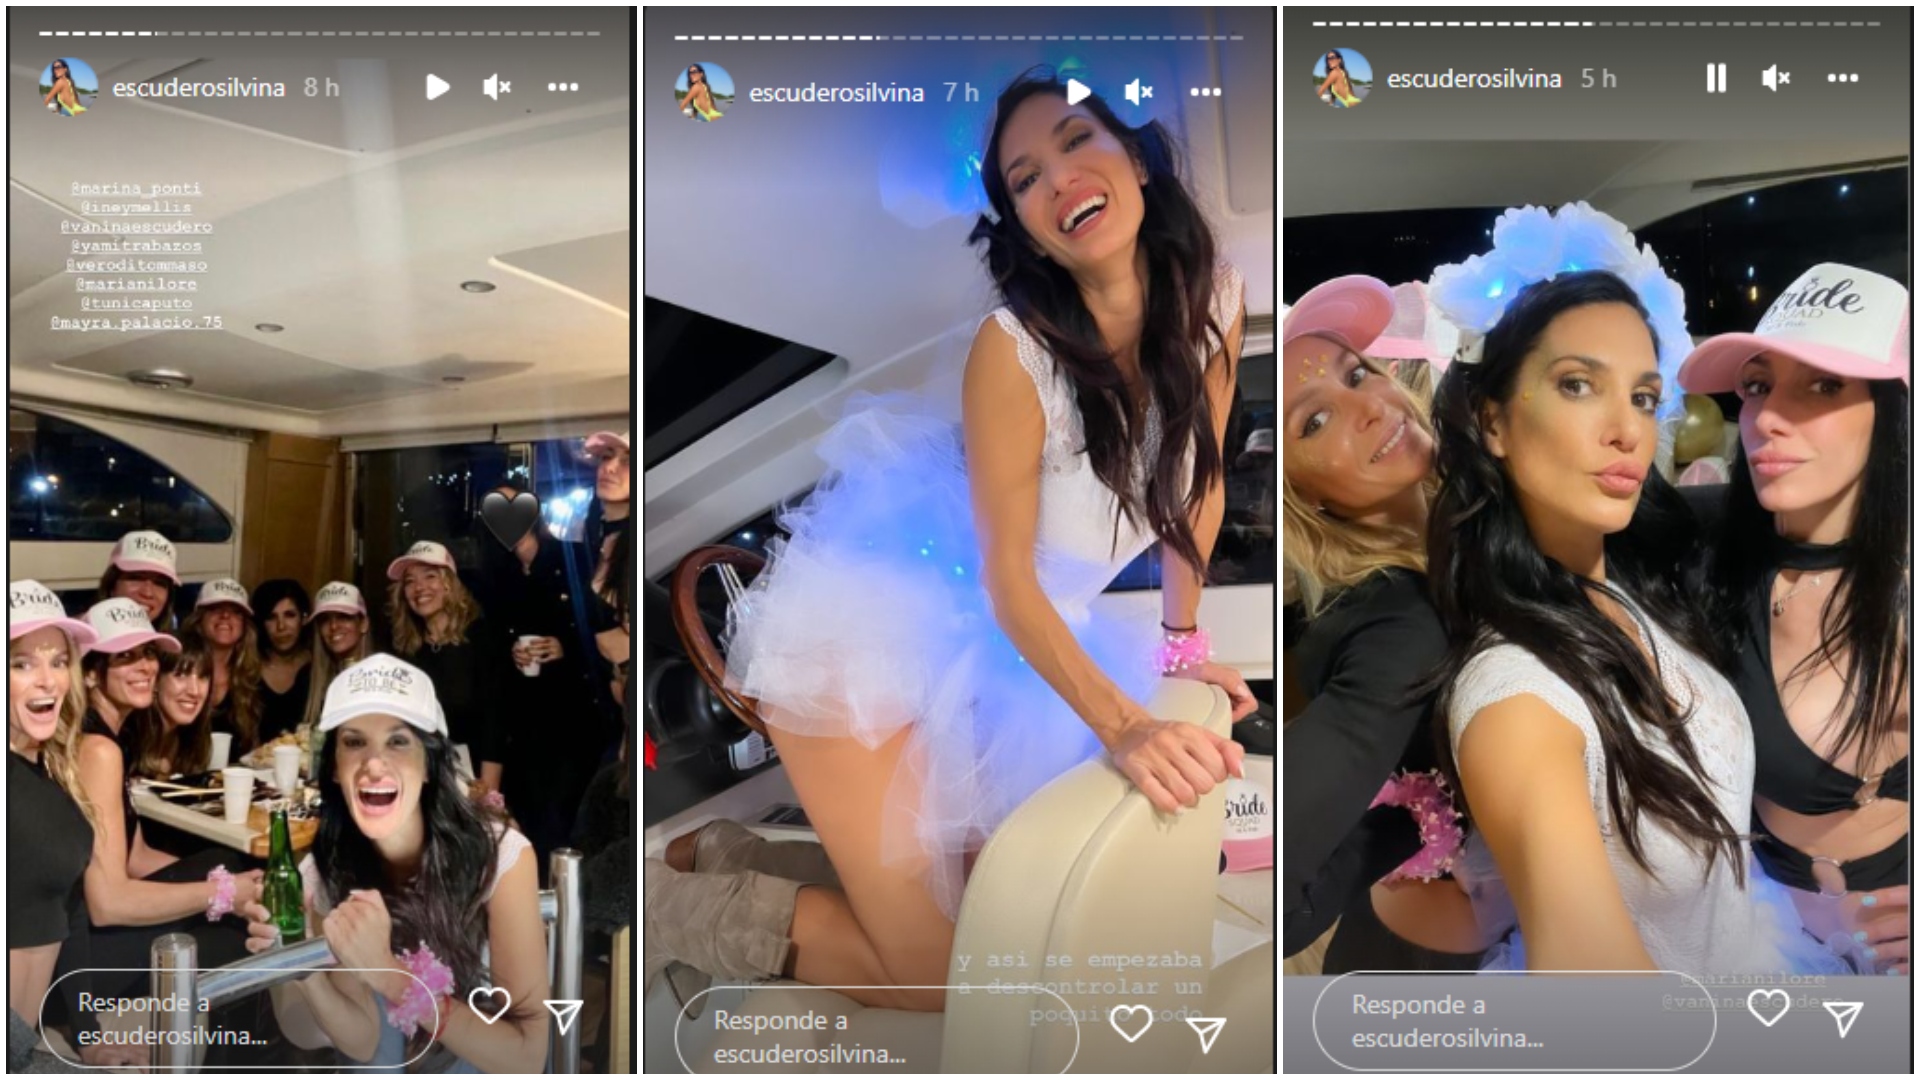 Some pictures from Silvina Escudero's crazy bachelorette party